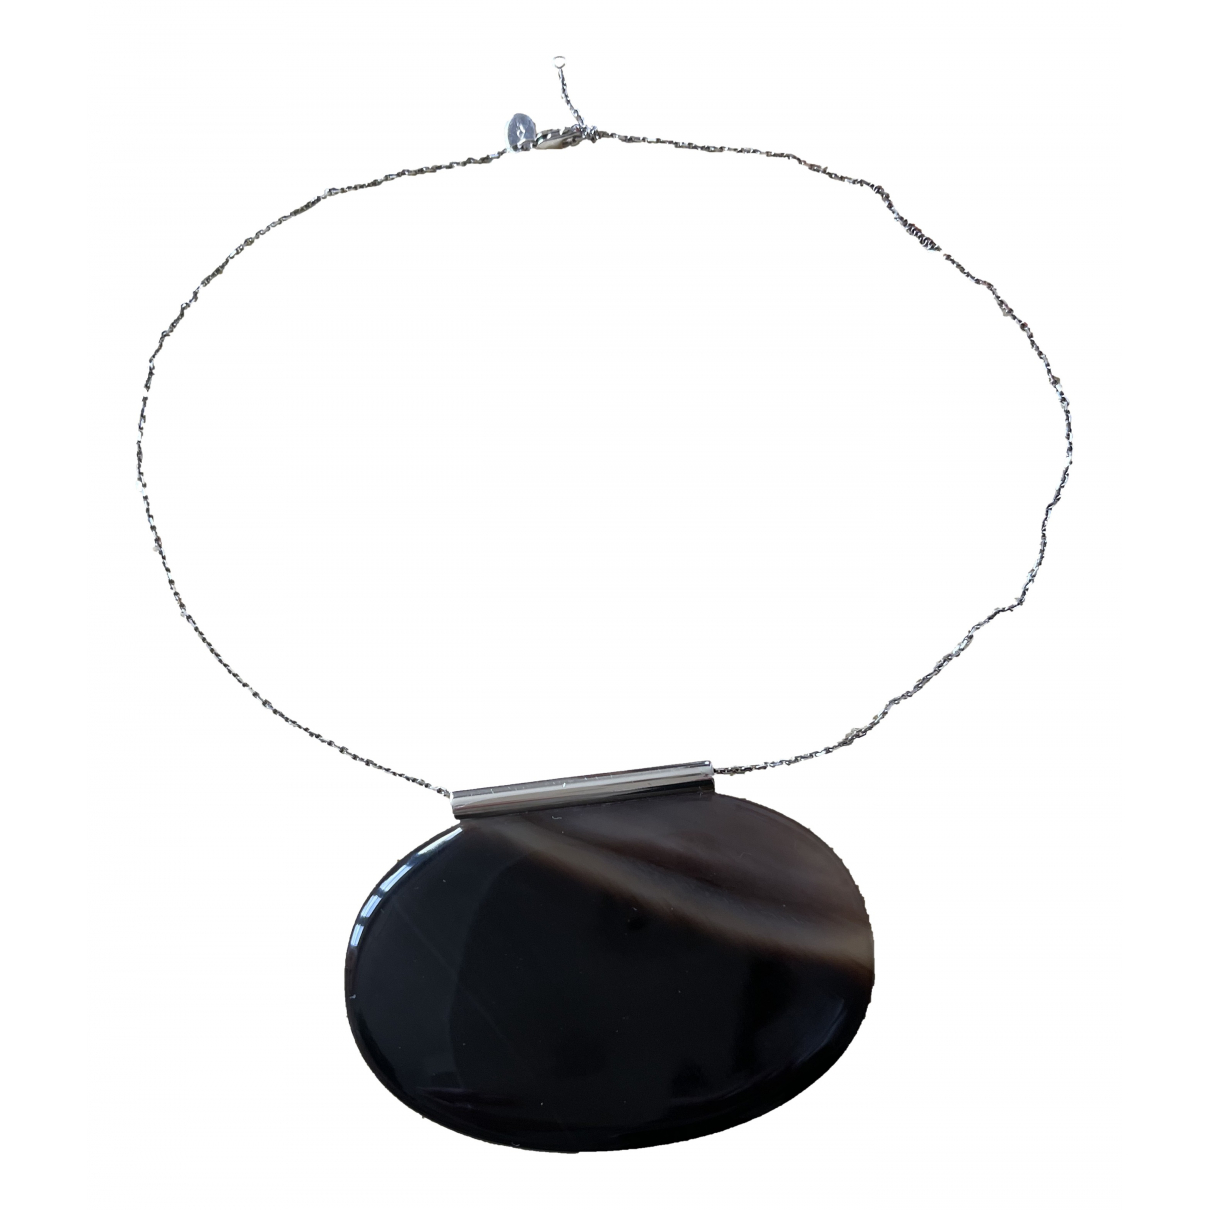 Horn Sale item security necklace